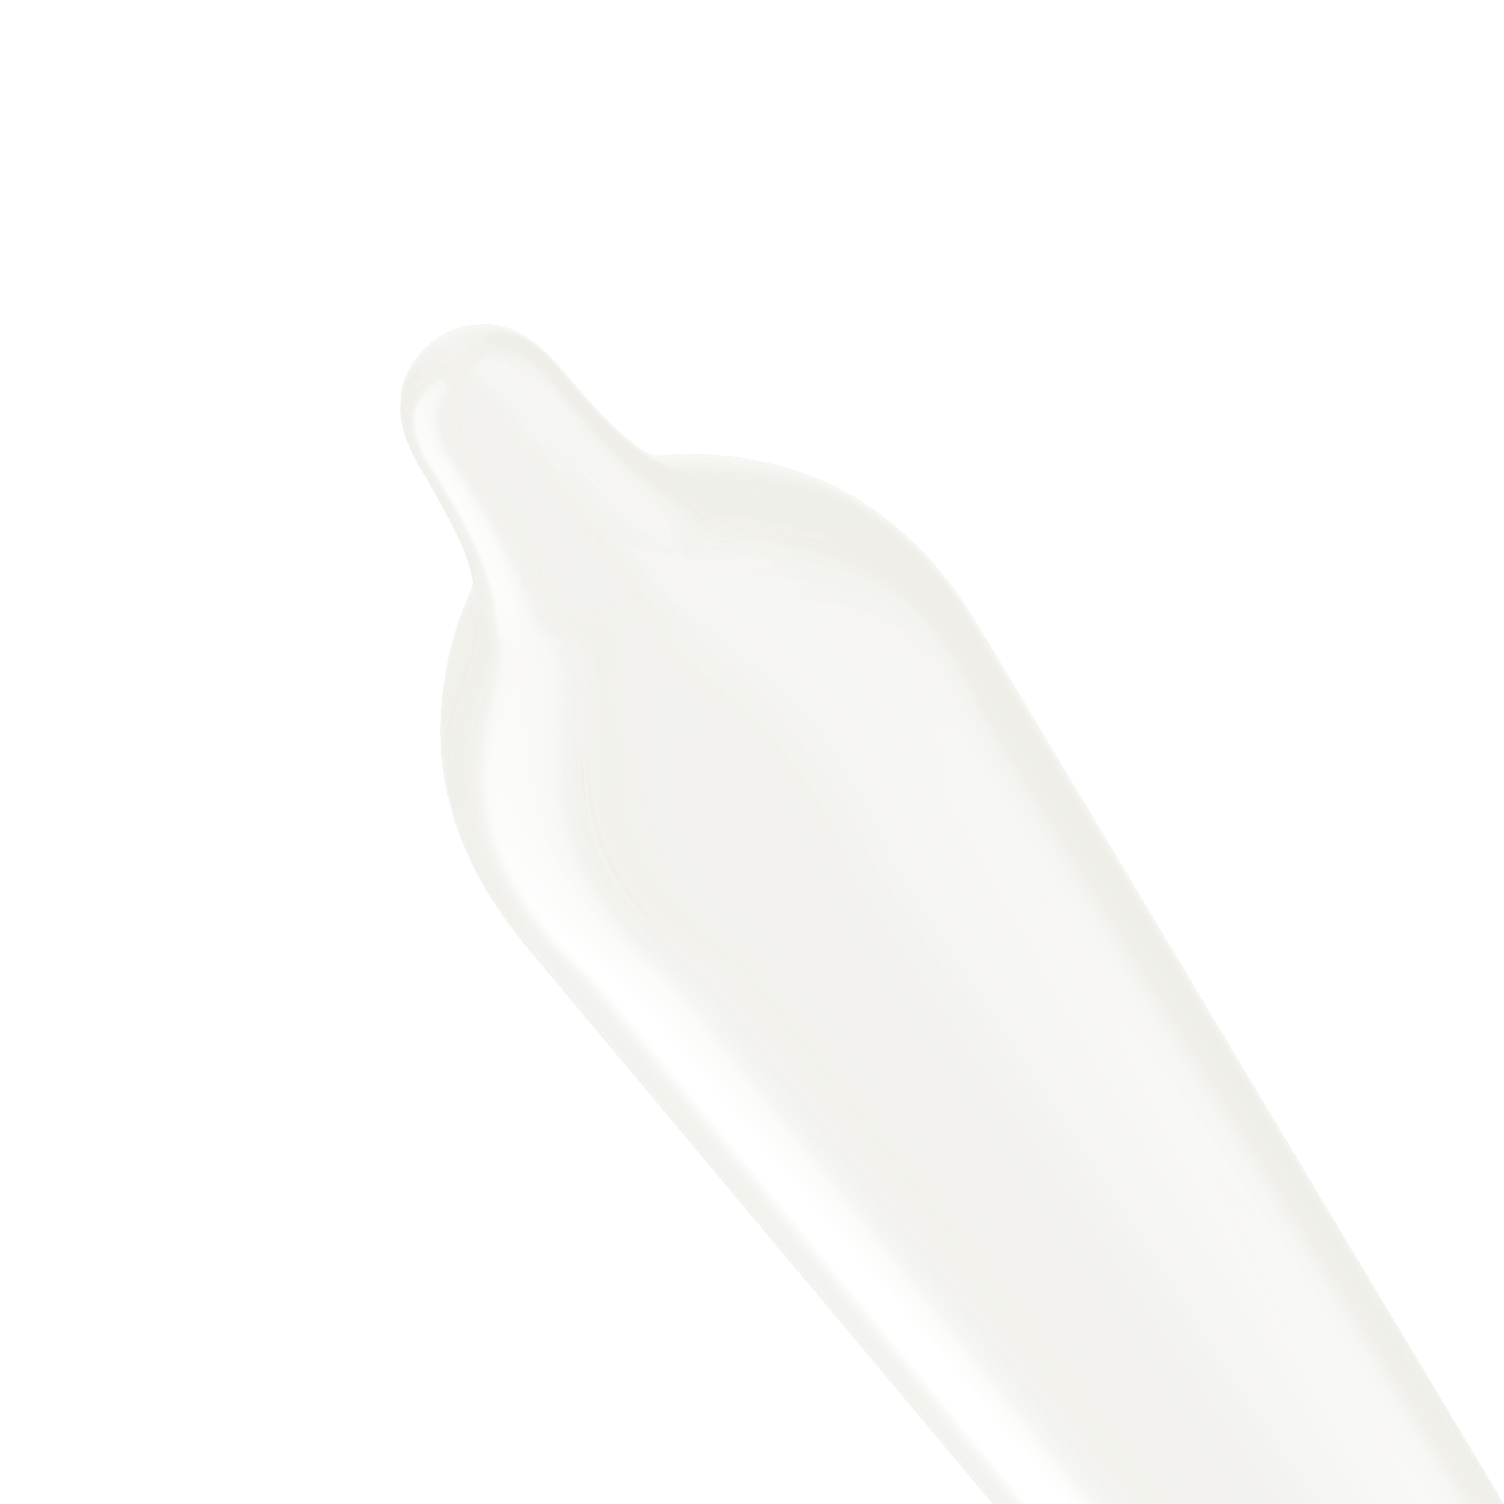 Trojan Bareskin Raw thin condom with straight shape and reservoir tip.